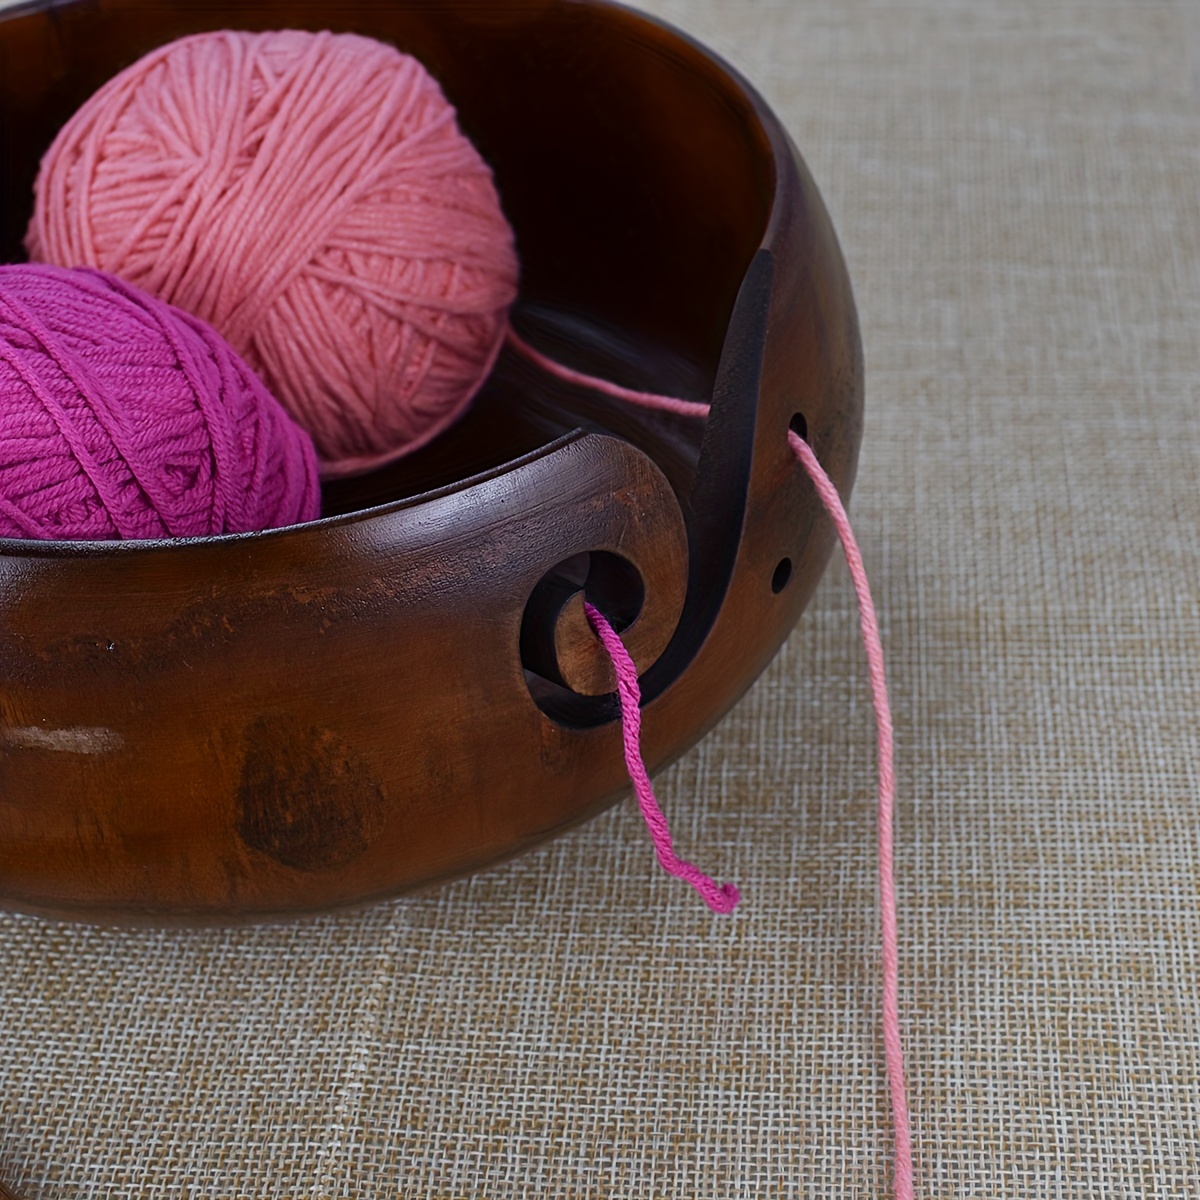 WILLBOND Wooden Yarn Bowl, 6 x 3 Inches Knitting Yarn Bowls with Holes  Crochet Bowl Holder Handmade Yarn Storage Bowl for DIY Knitting Crocheting  Accessories